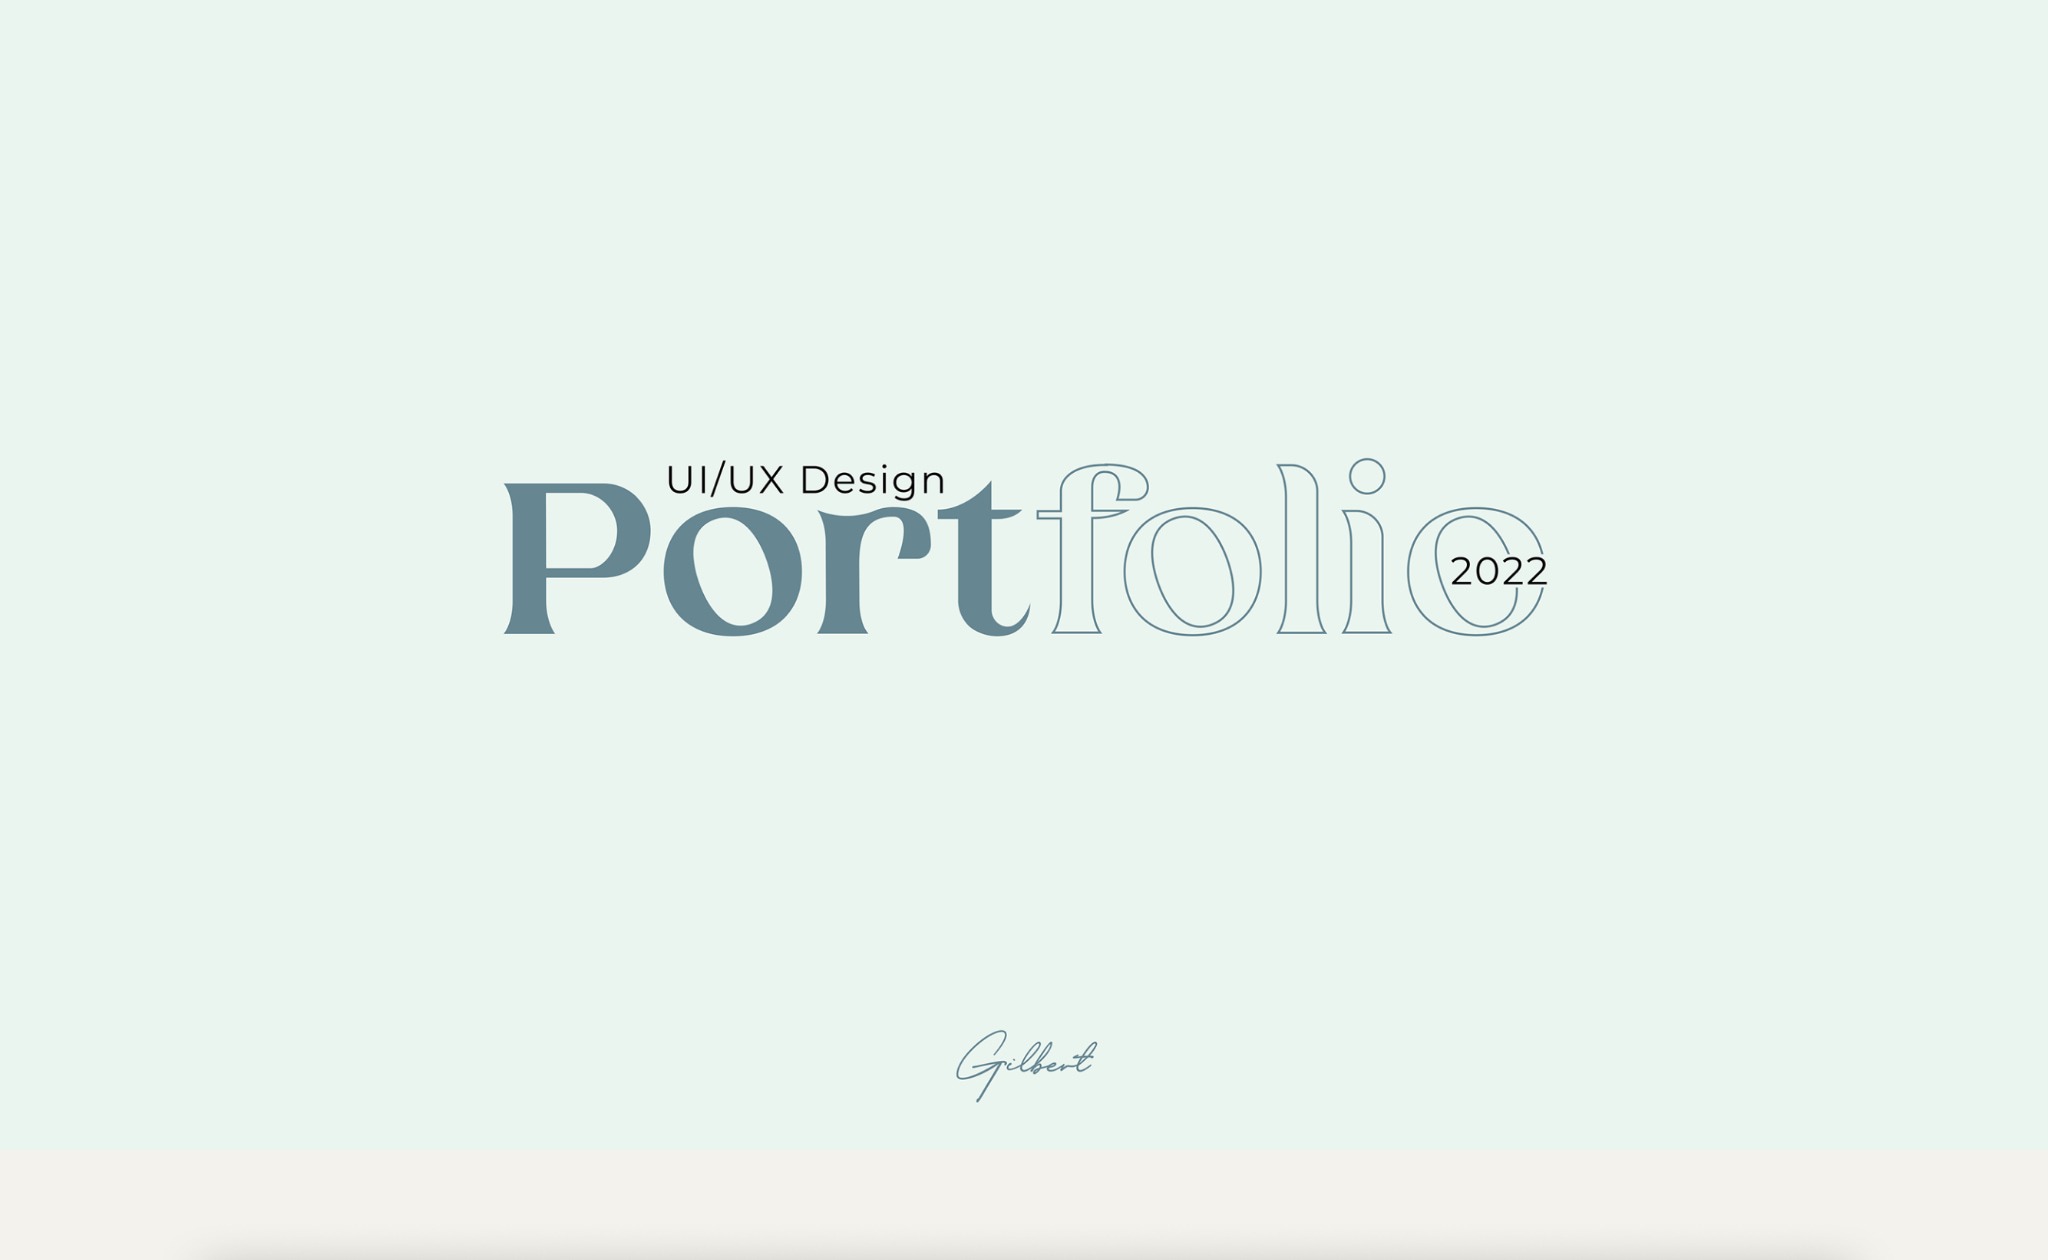 A screenshot of Gilbert Christian’s UX portfolio